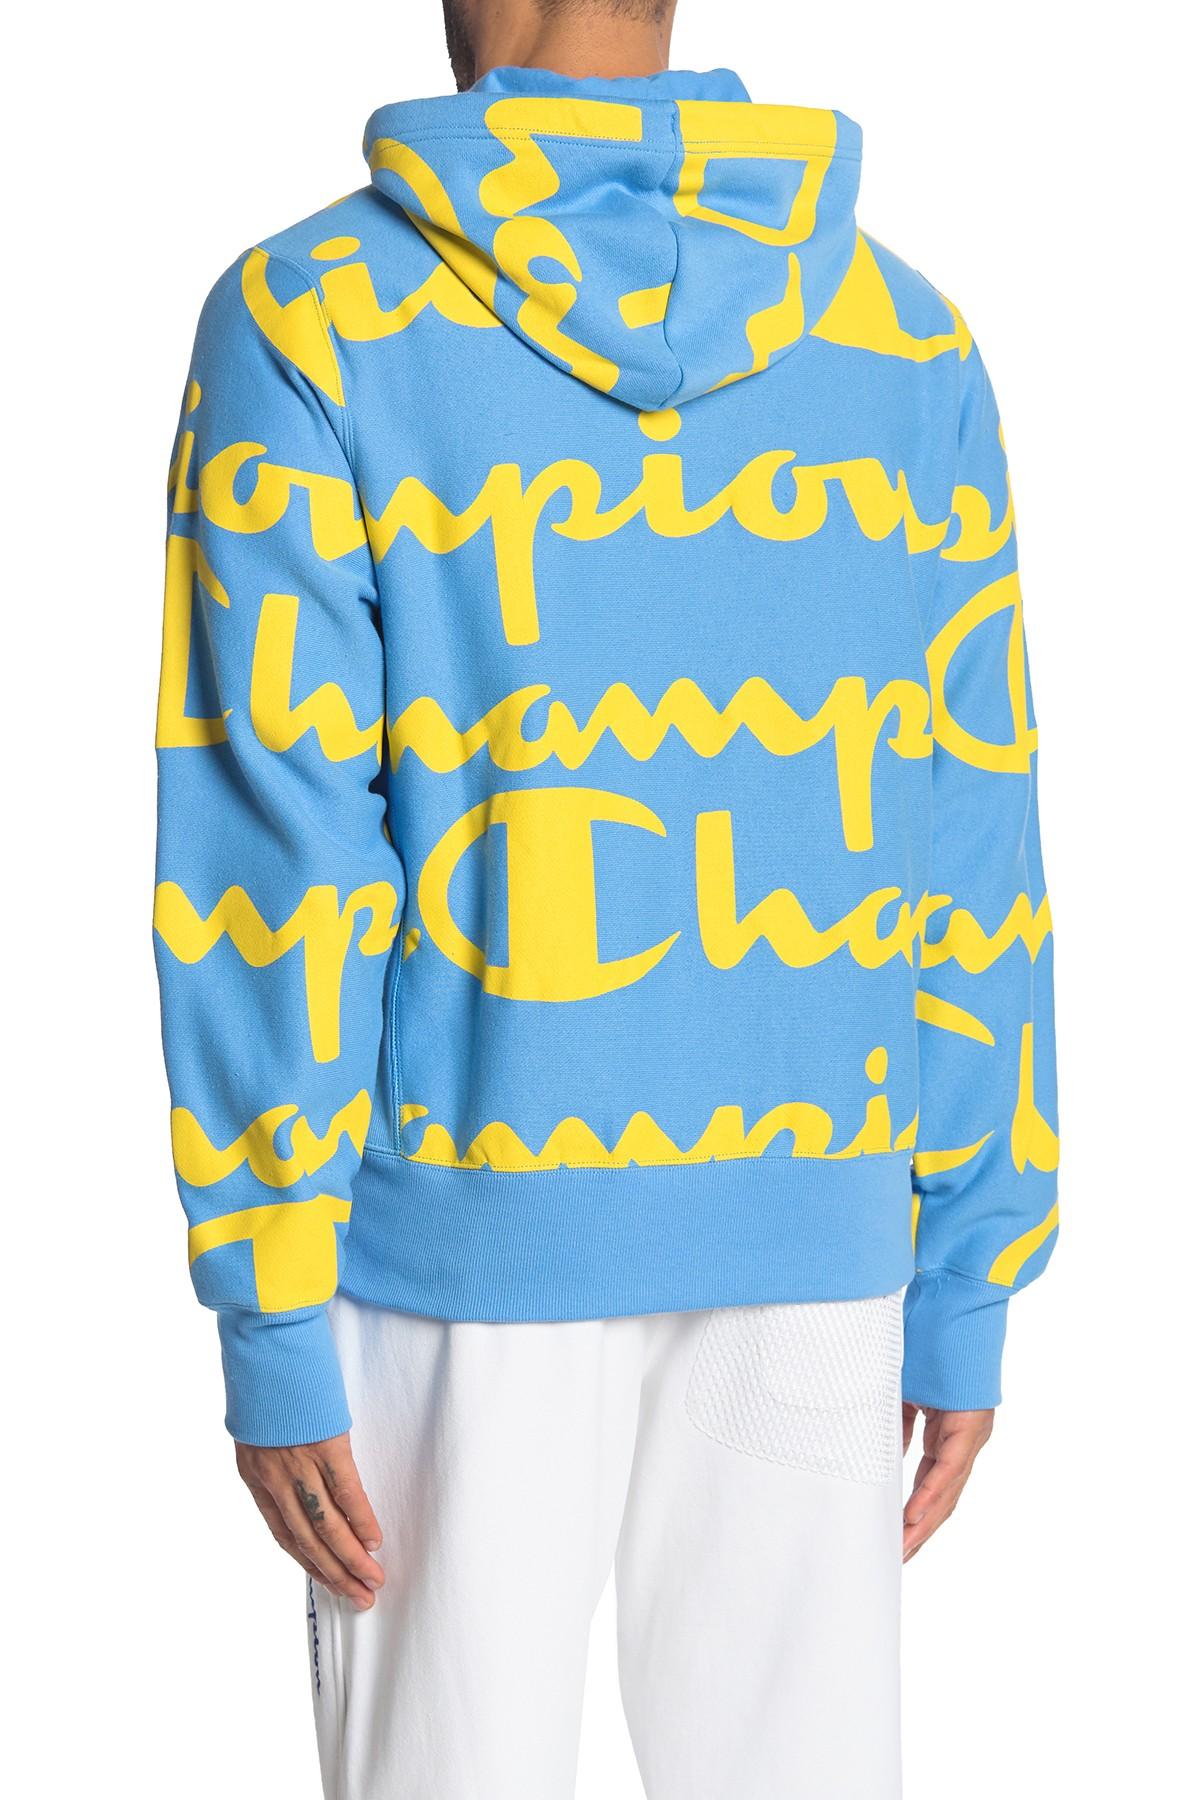 tiffany blue champion hoodie